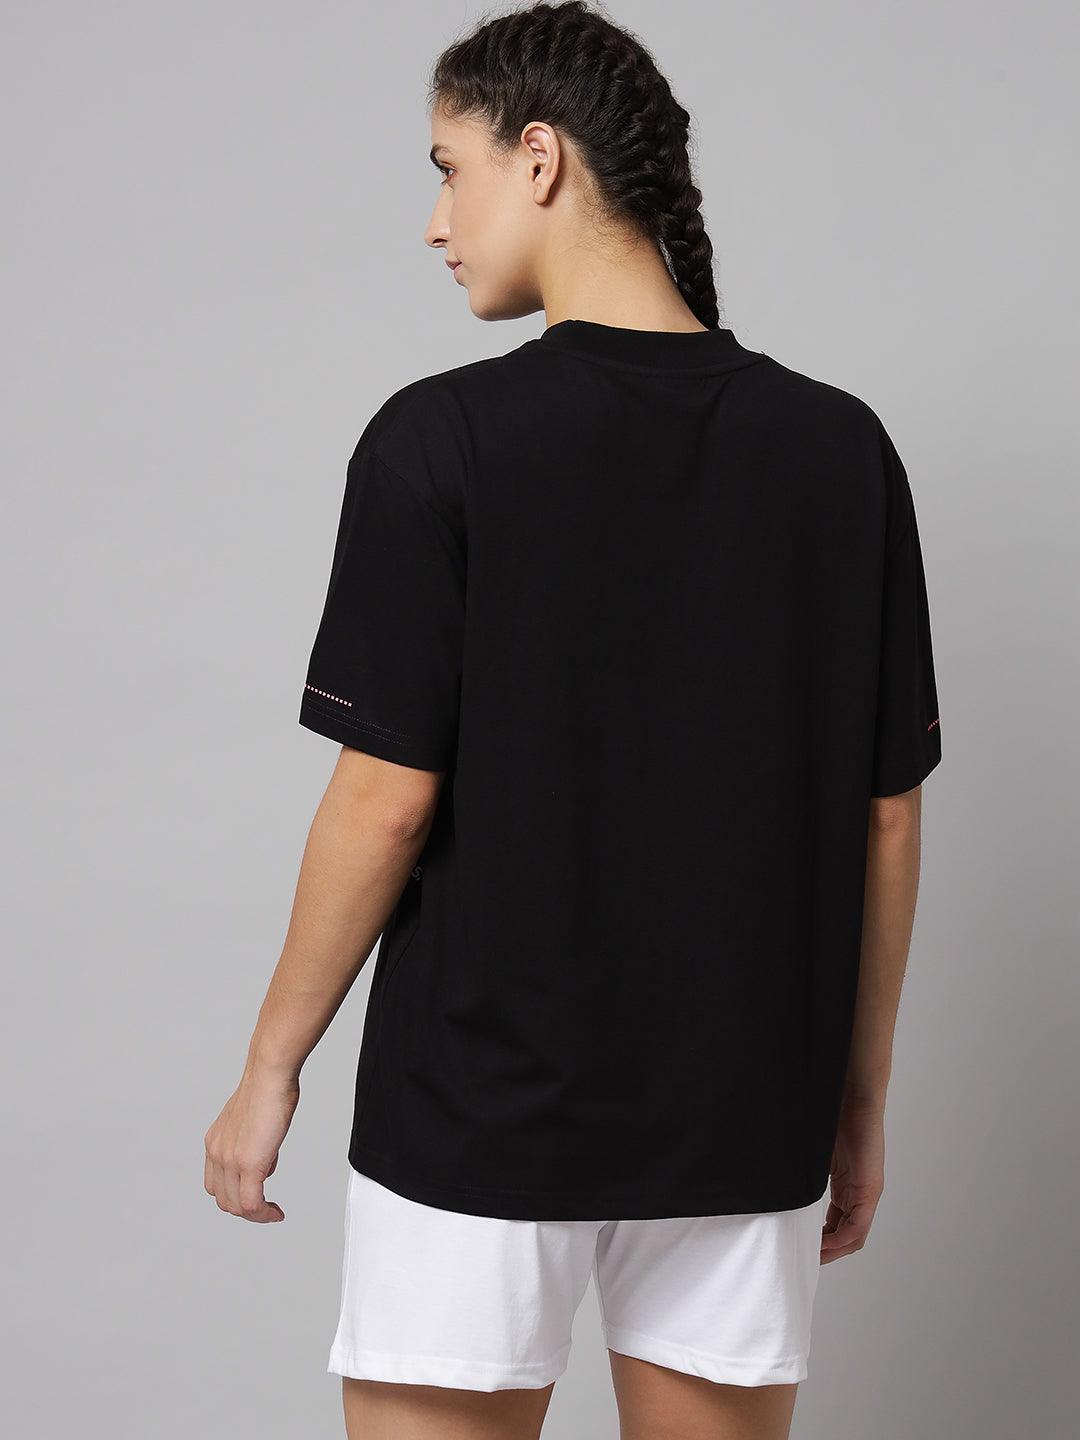 GRIFFEL Women Teddy Print Loose fit Black T-shirt - griffel